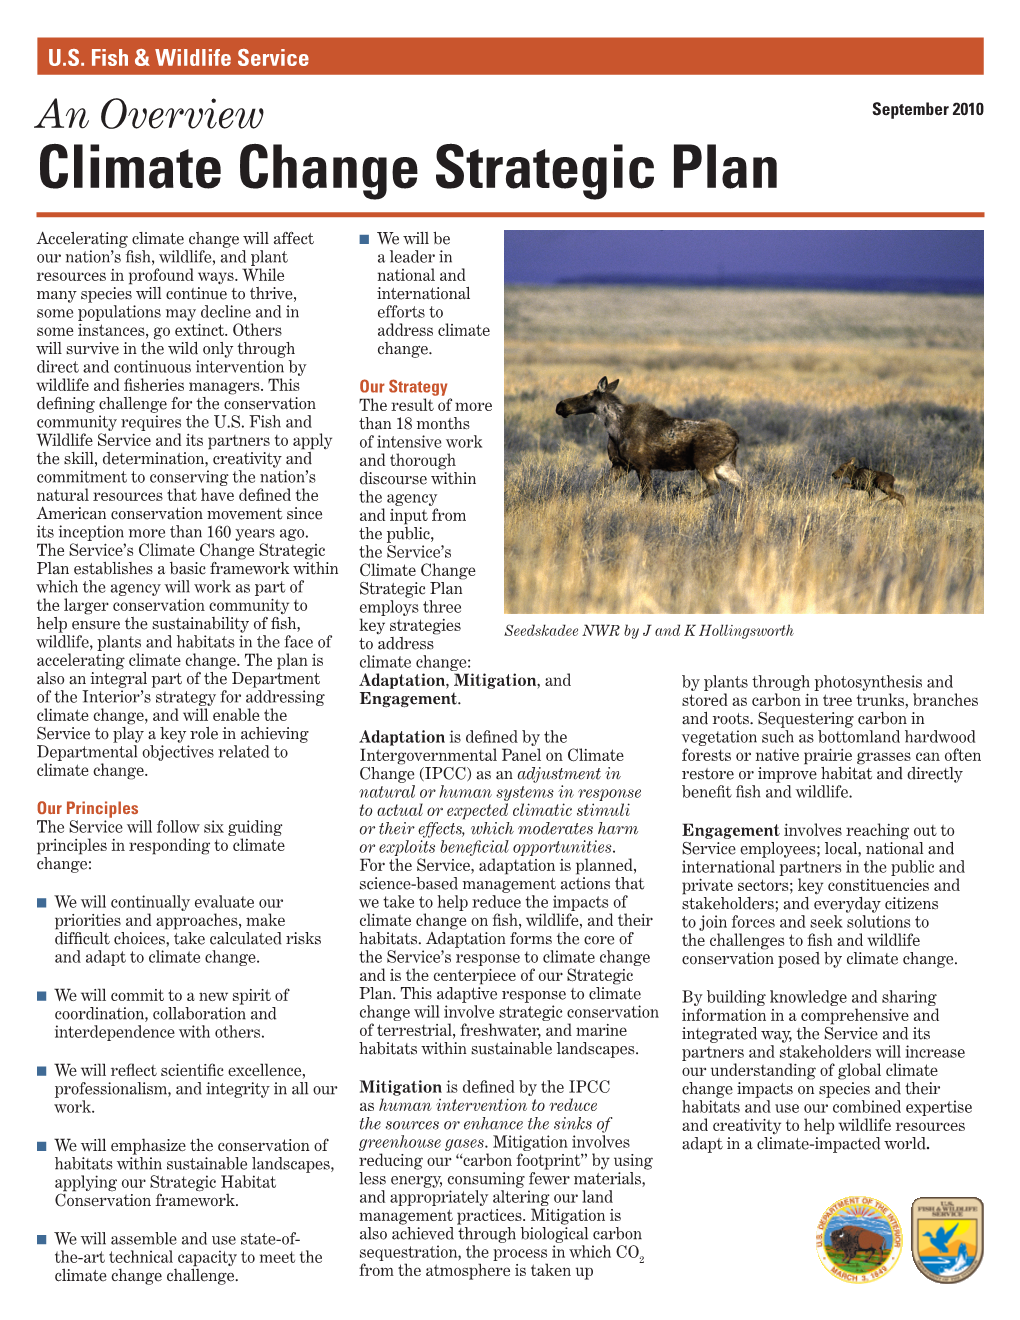 Climate Change Strategic Plan